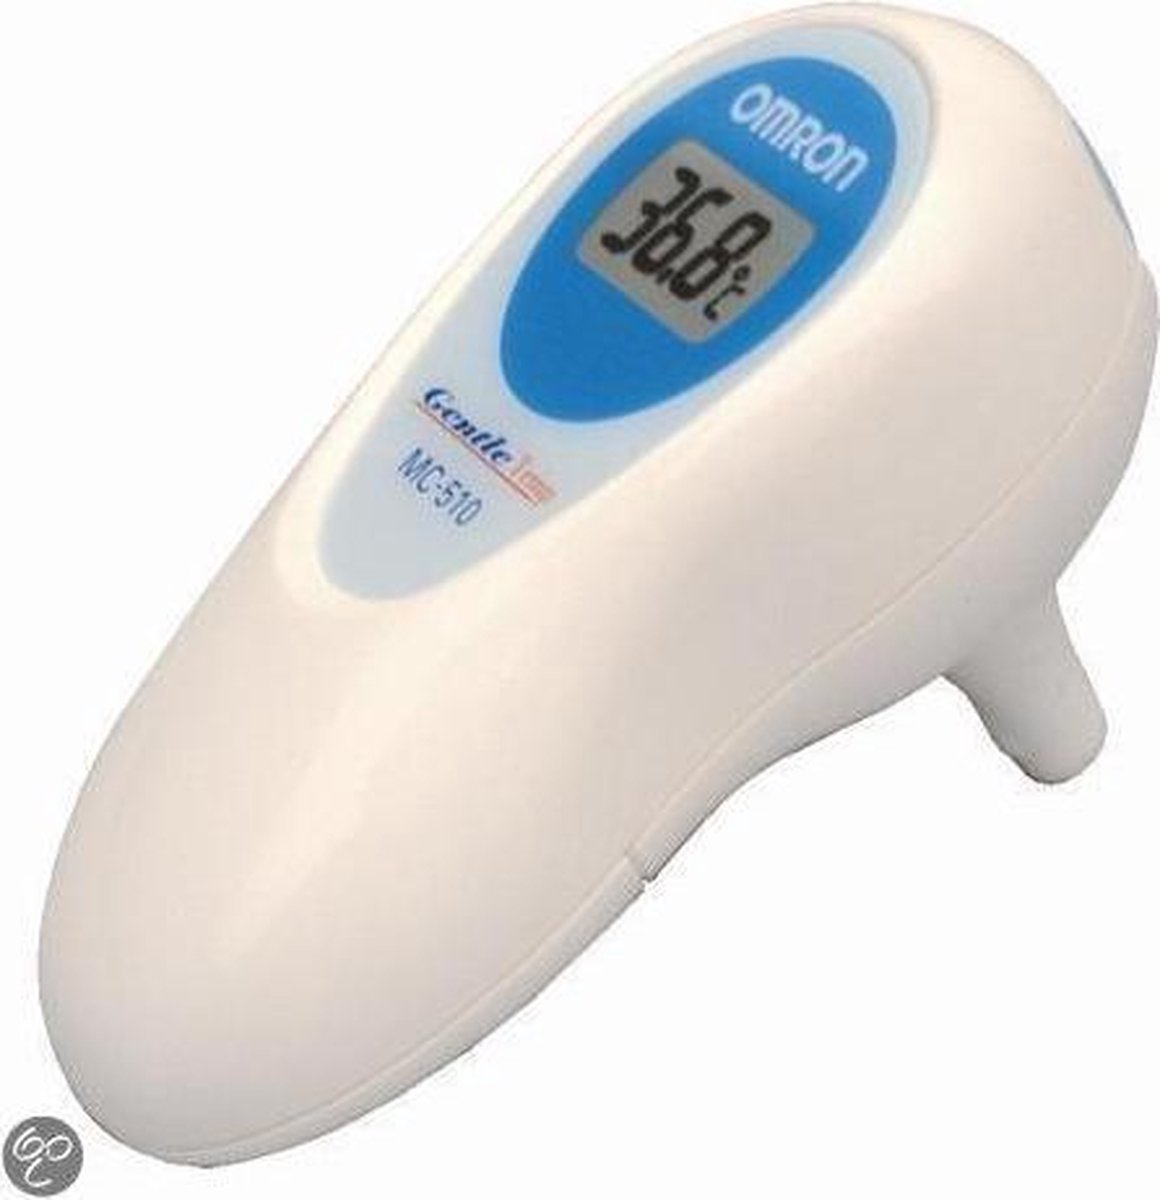 Gepensioneerde Onderzoek Internationale Omron MC-510-E - Lichaamsthermometer | bol.com